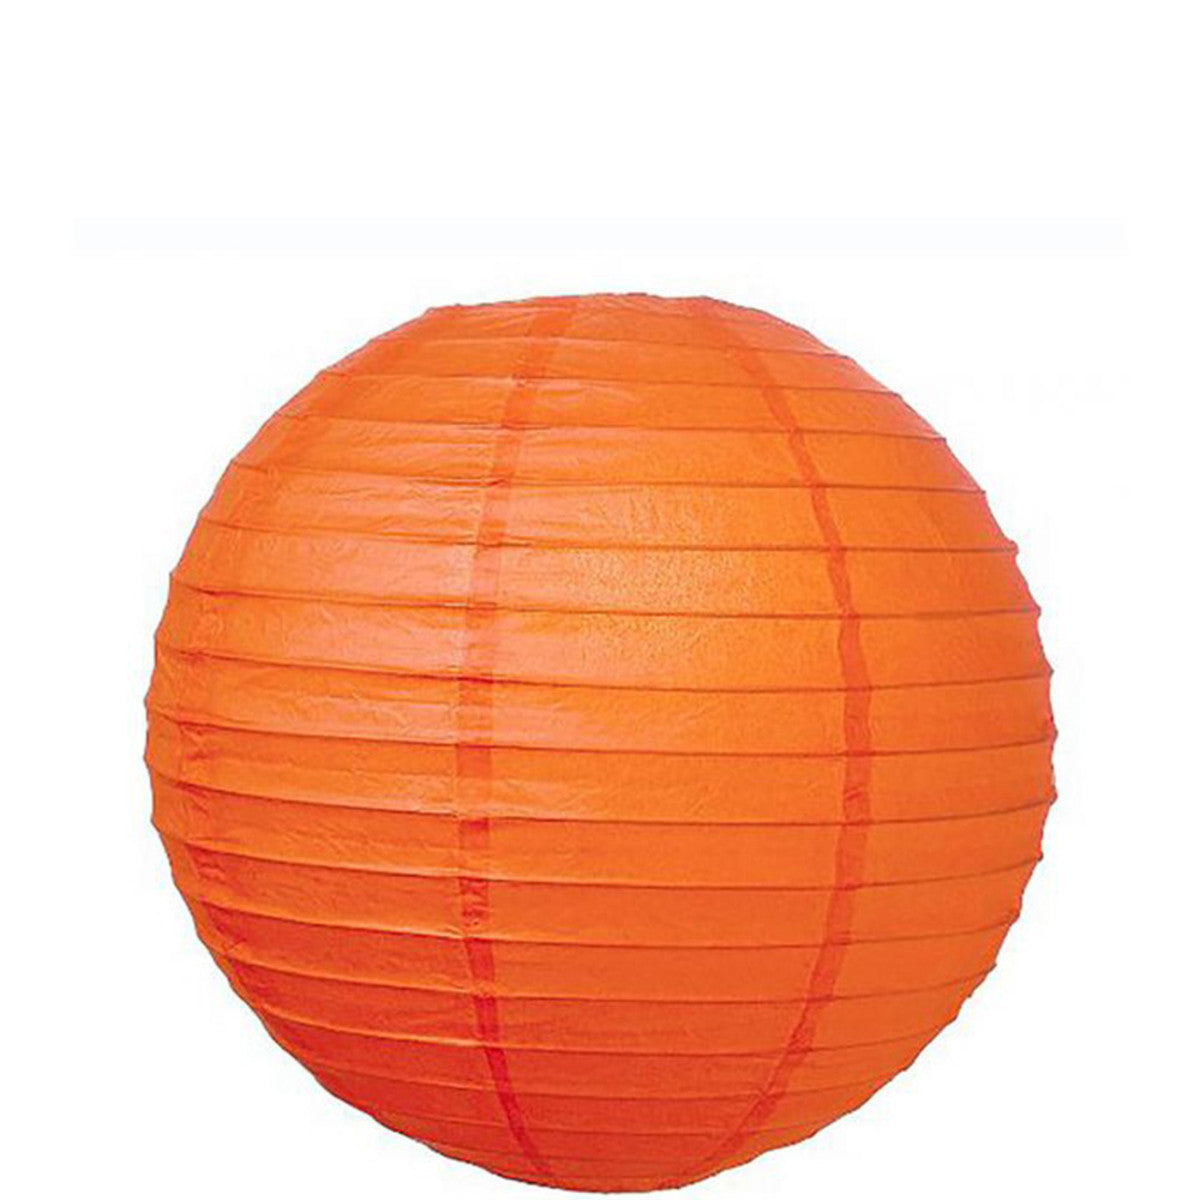 orange paper lanterns for sale online in Dubai